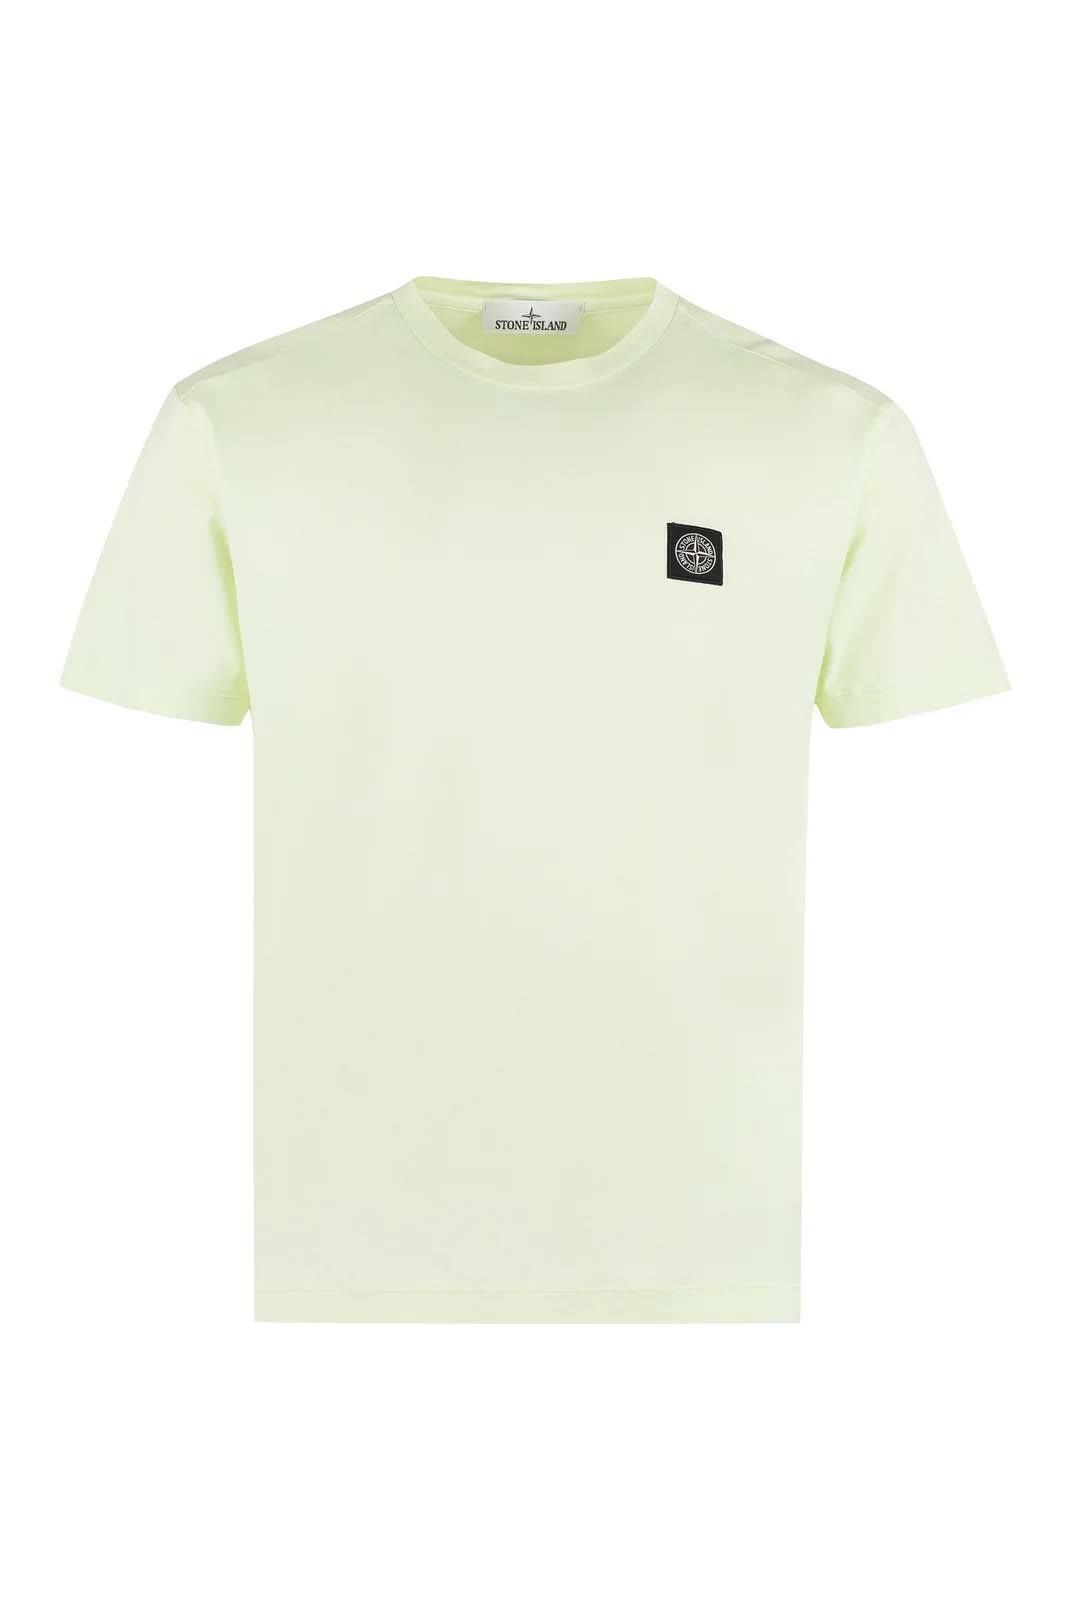 Stone Island Logo T-Shirt Mint Green